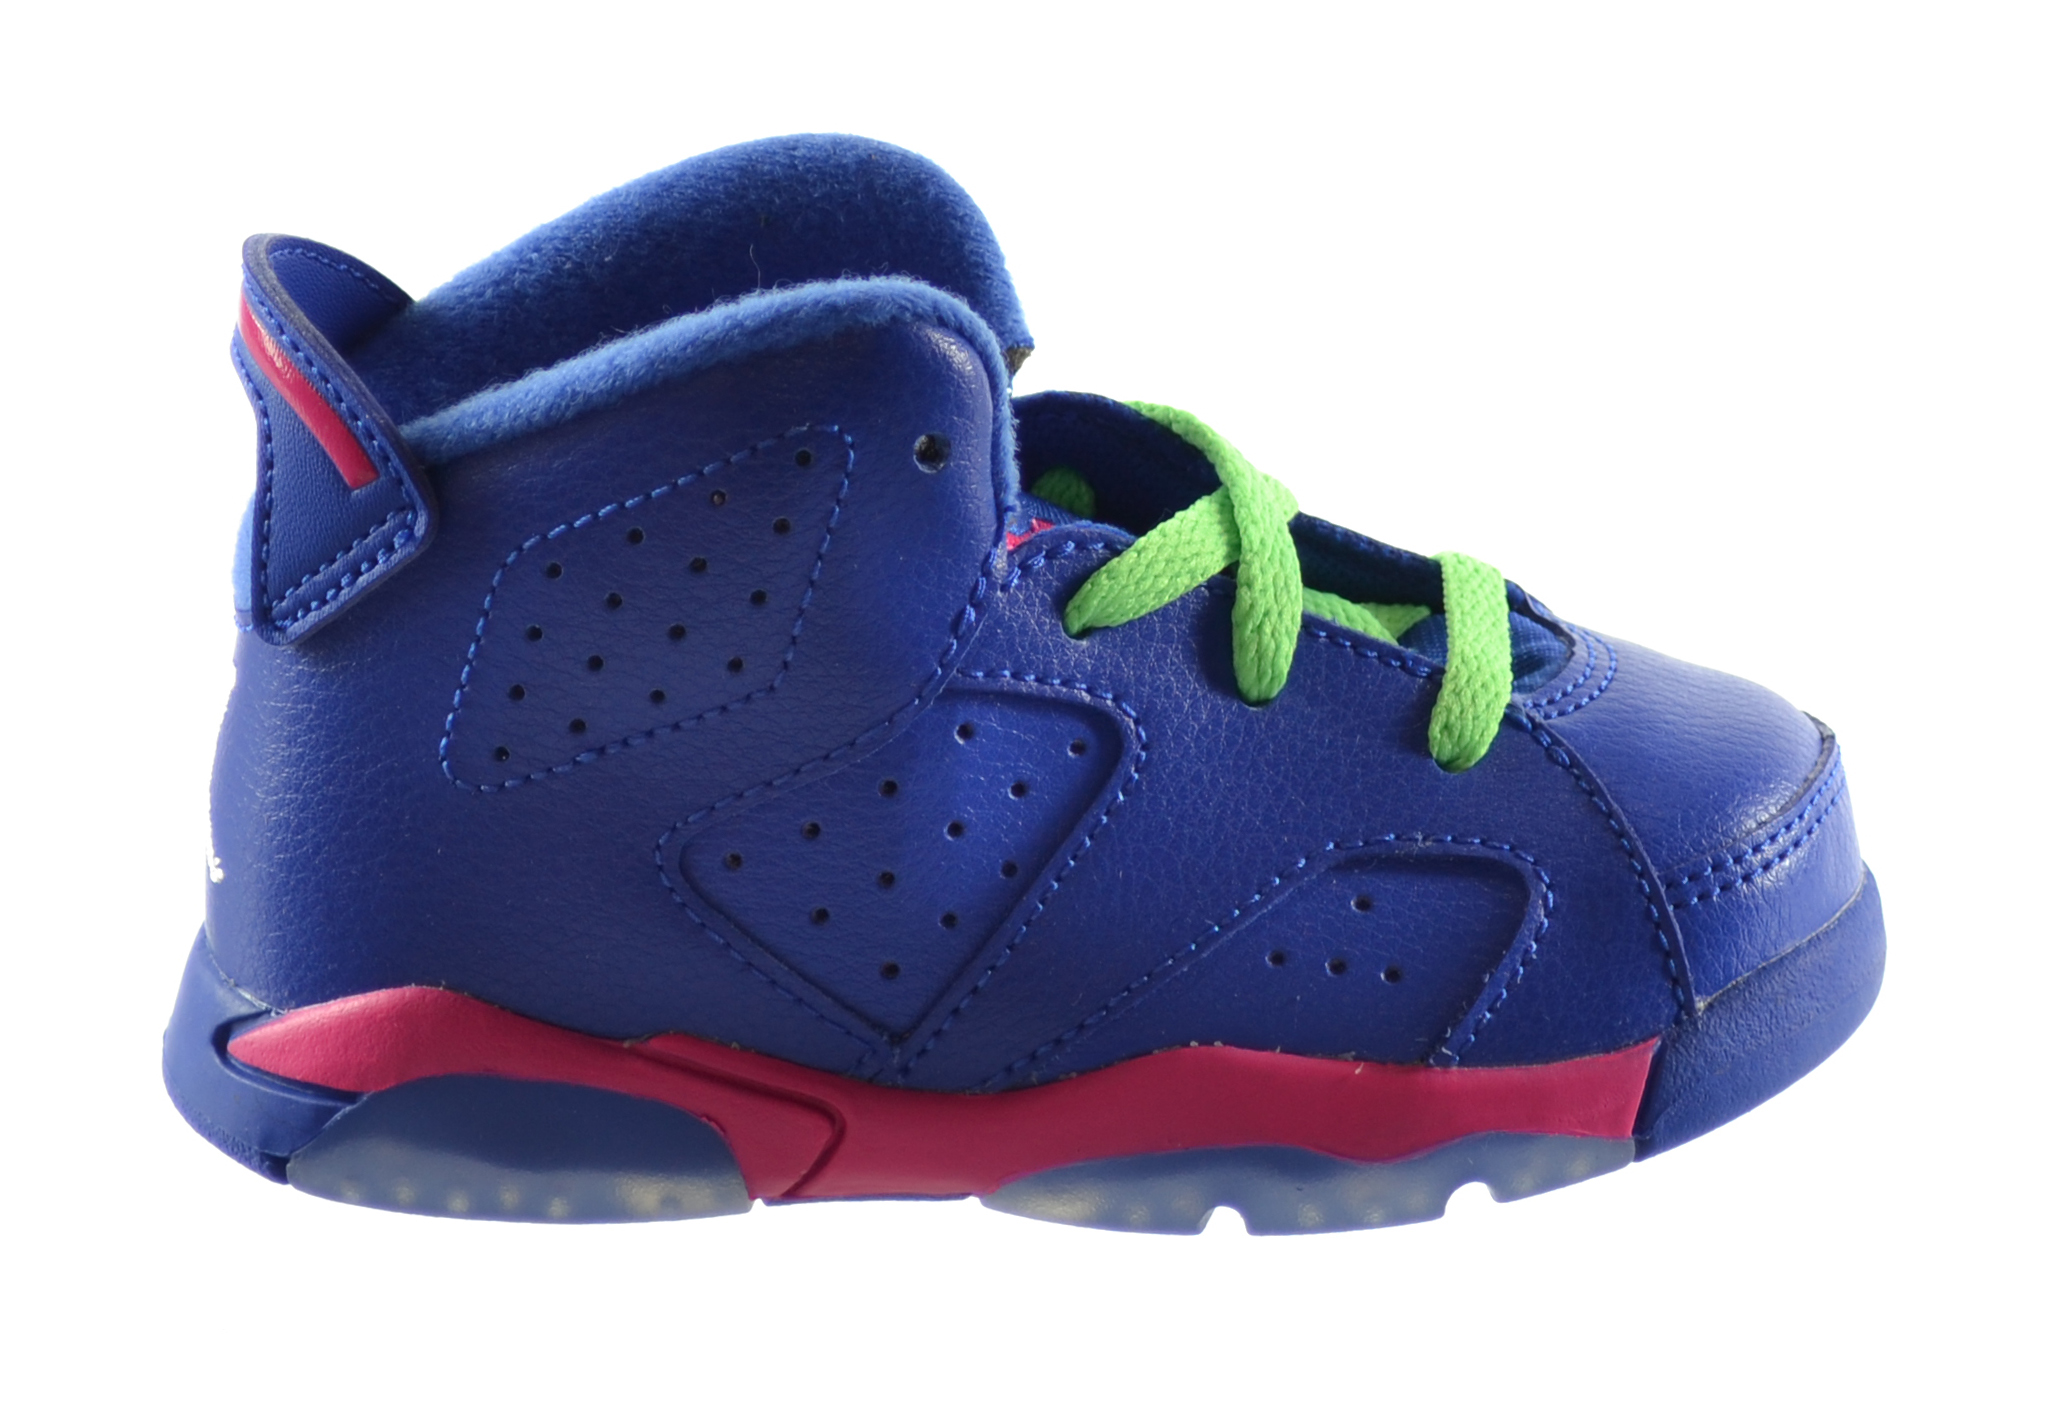 Jordan 6 Retro (BT) Baby Toddlers Basketball Shoes Gym Royal-White-Pink-Green 384667-439 - image 1 of 6